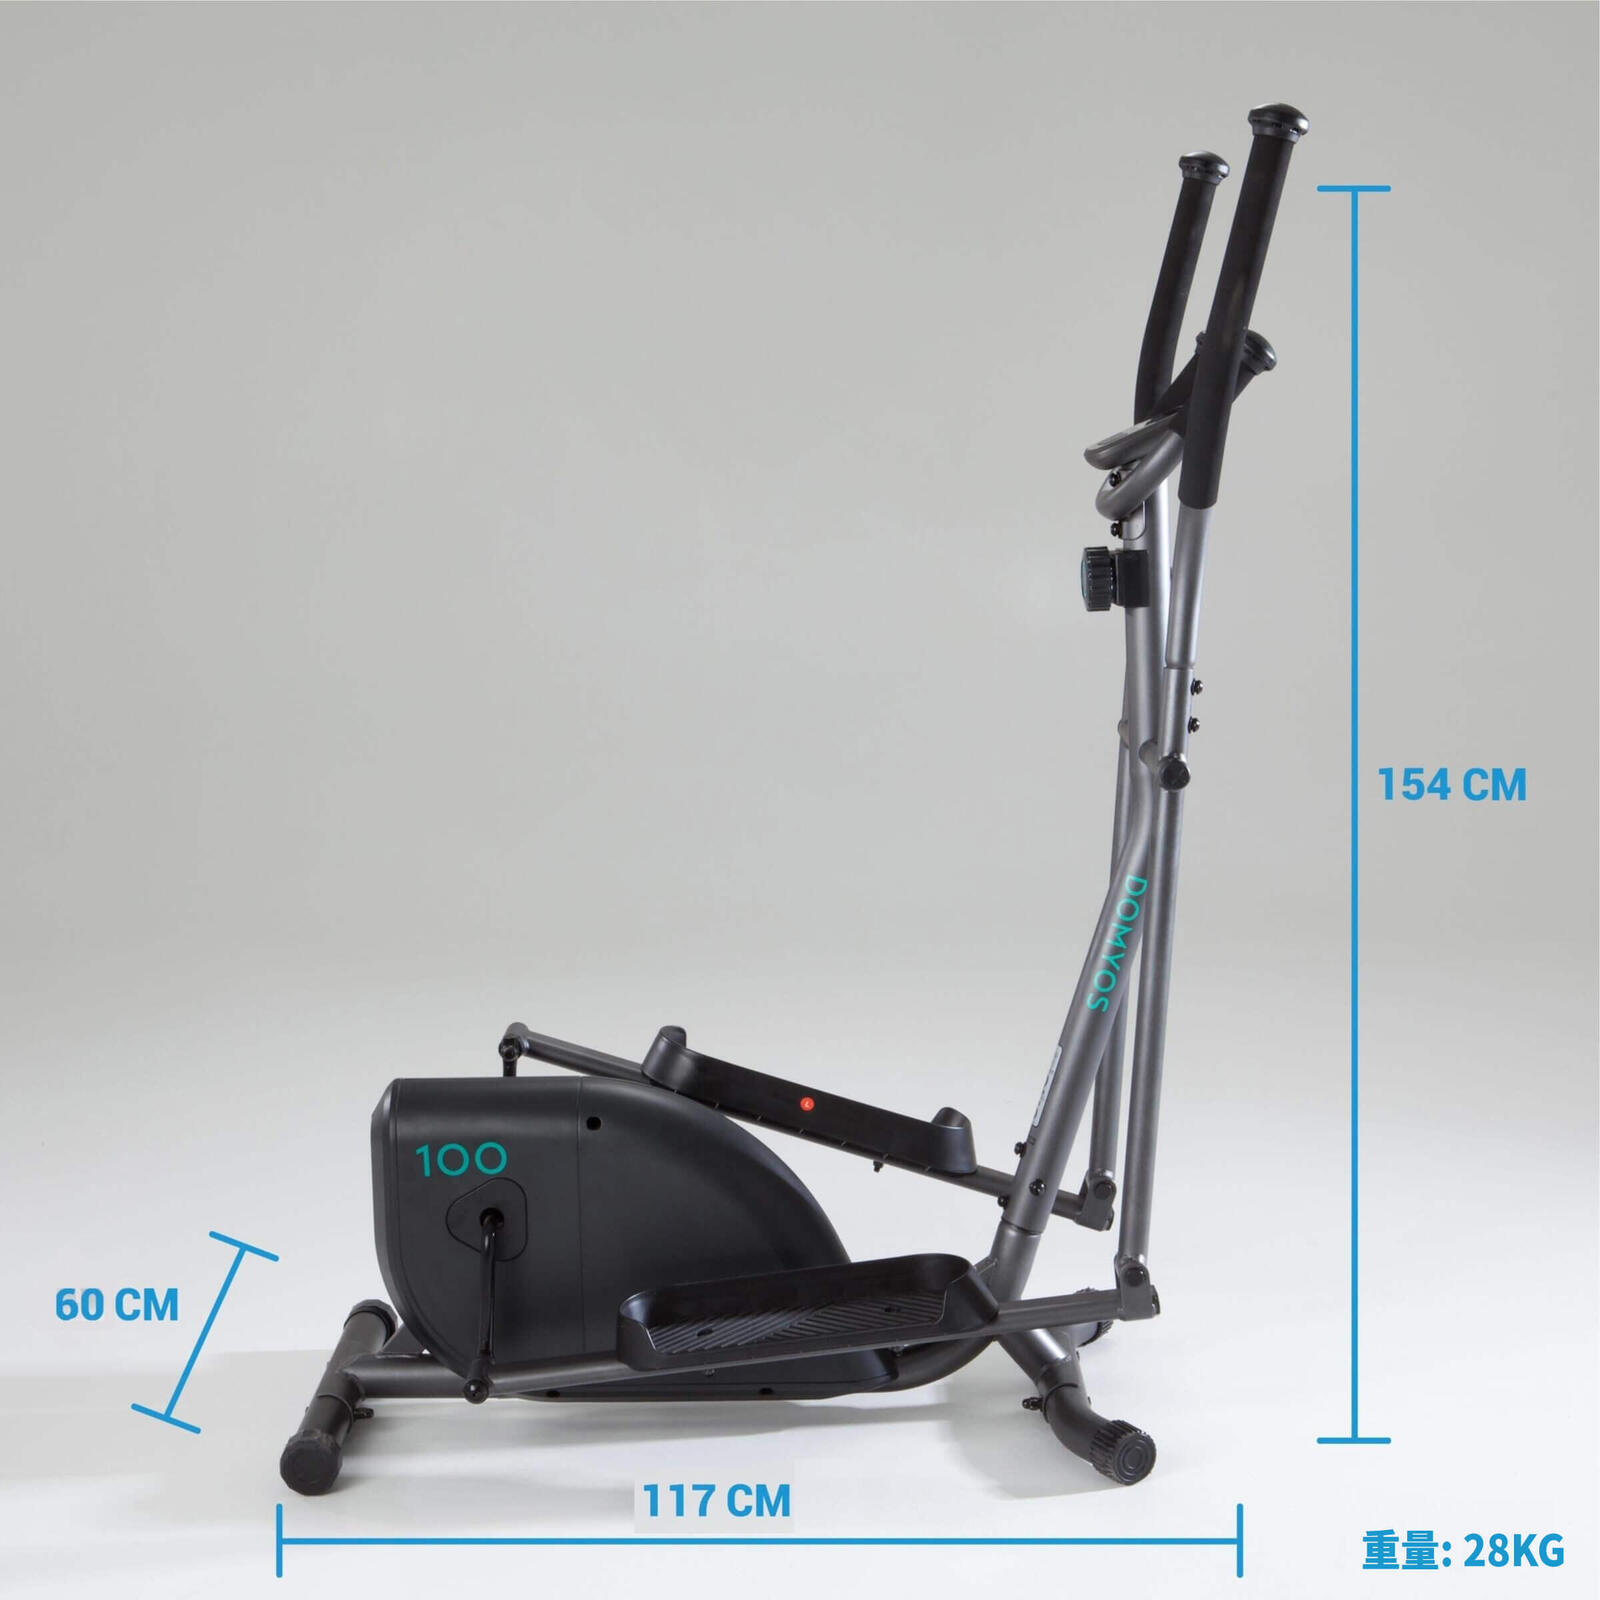 Fitness adjustable Universal Mat Strap - Black, Deep petrol blue - Domyos -  Decathlon